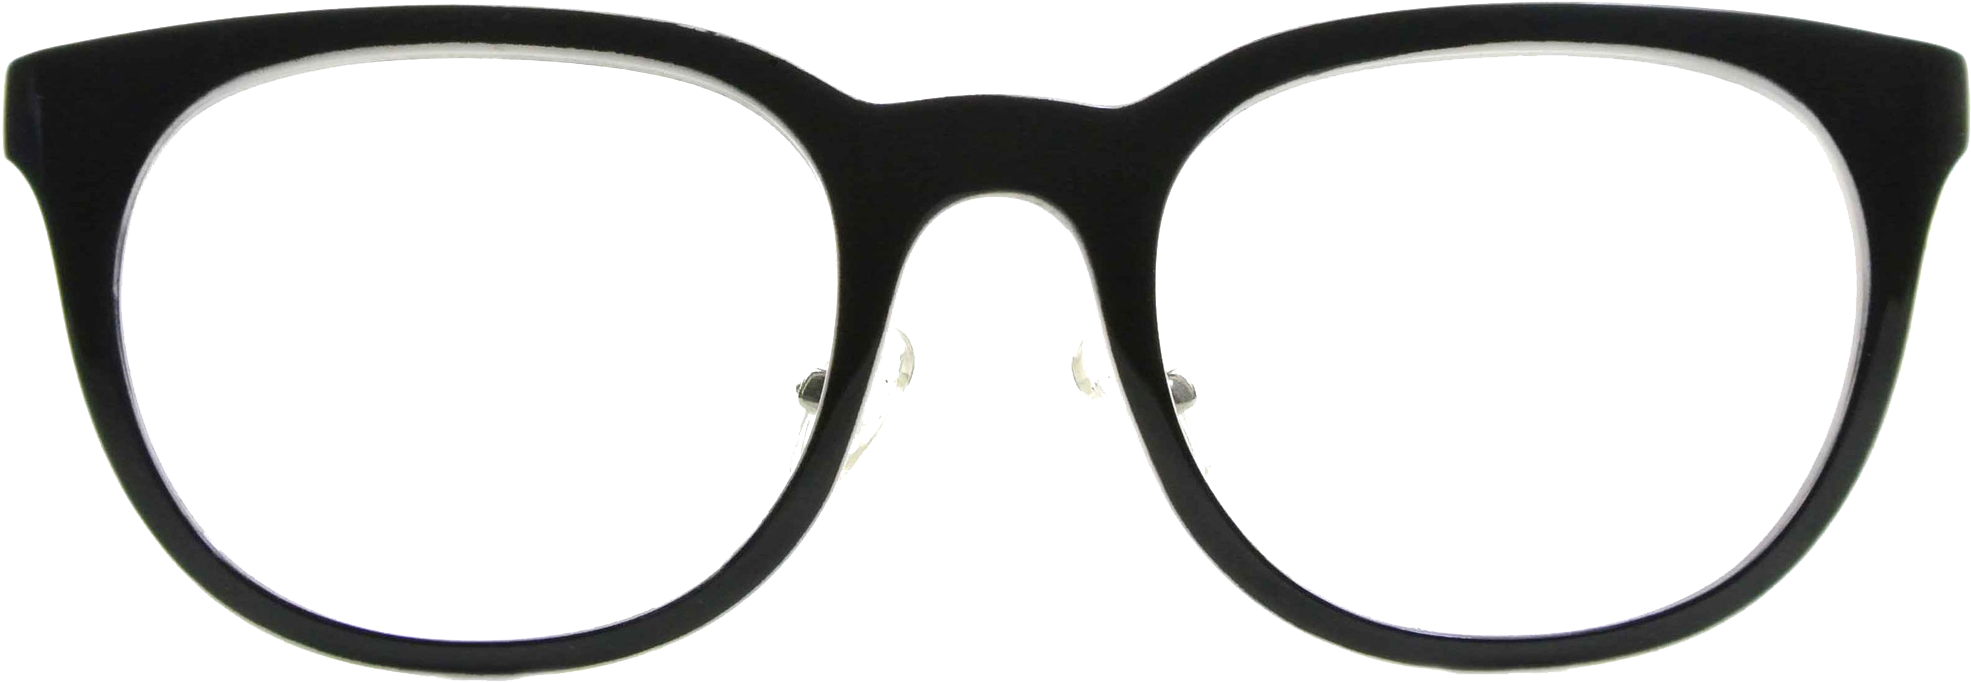 Hipster Glasses Png Image Background - Hipster Glasses Transparent  Background - (2048x782) Png Clipart Download